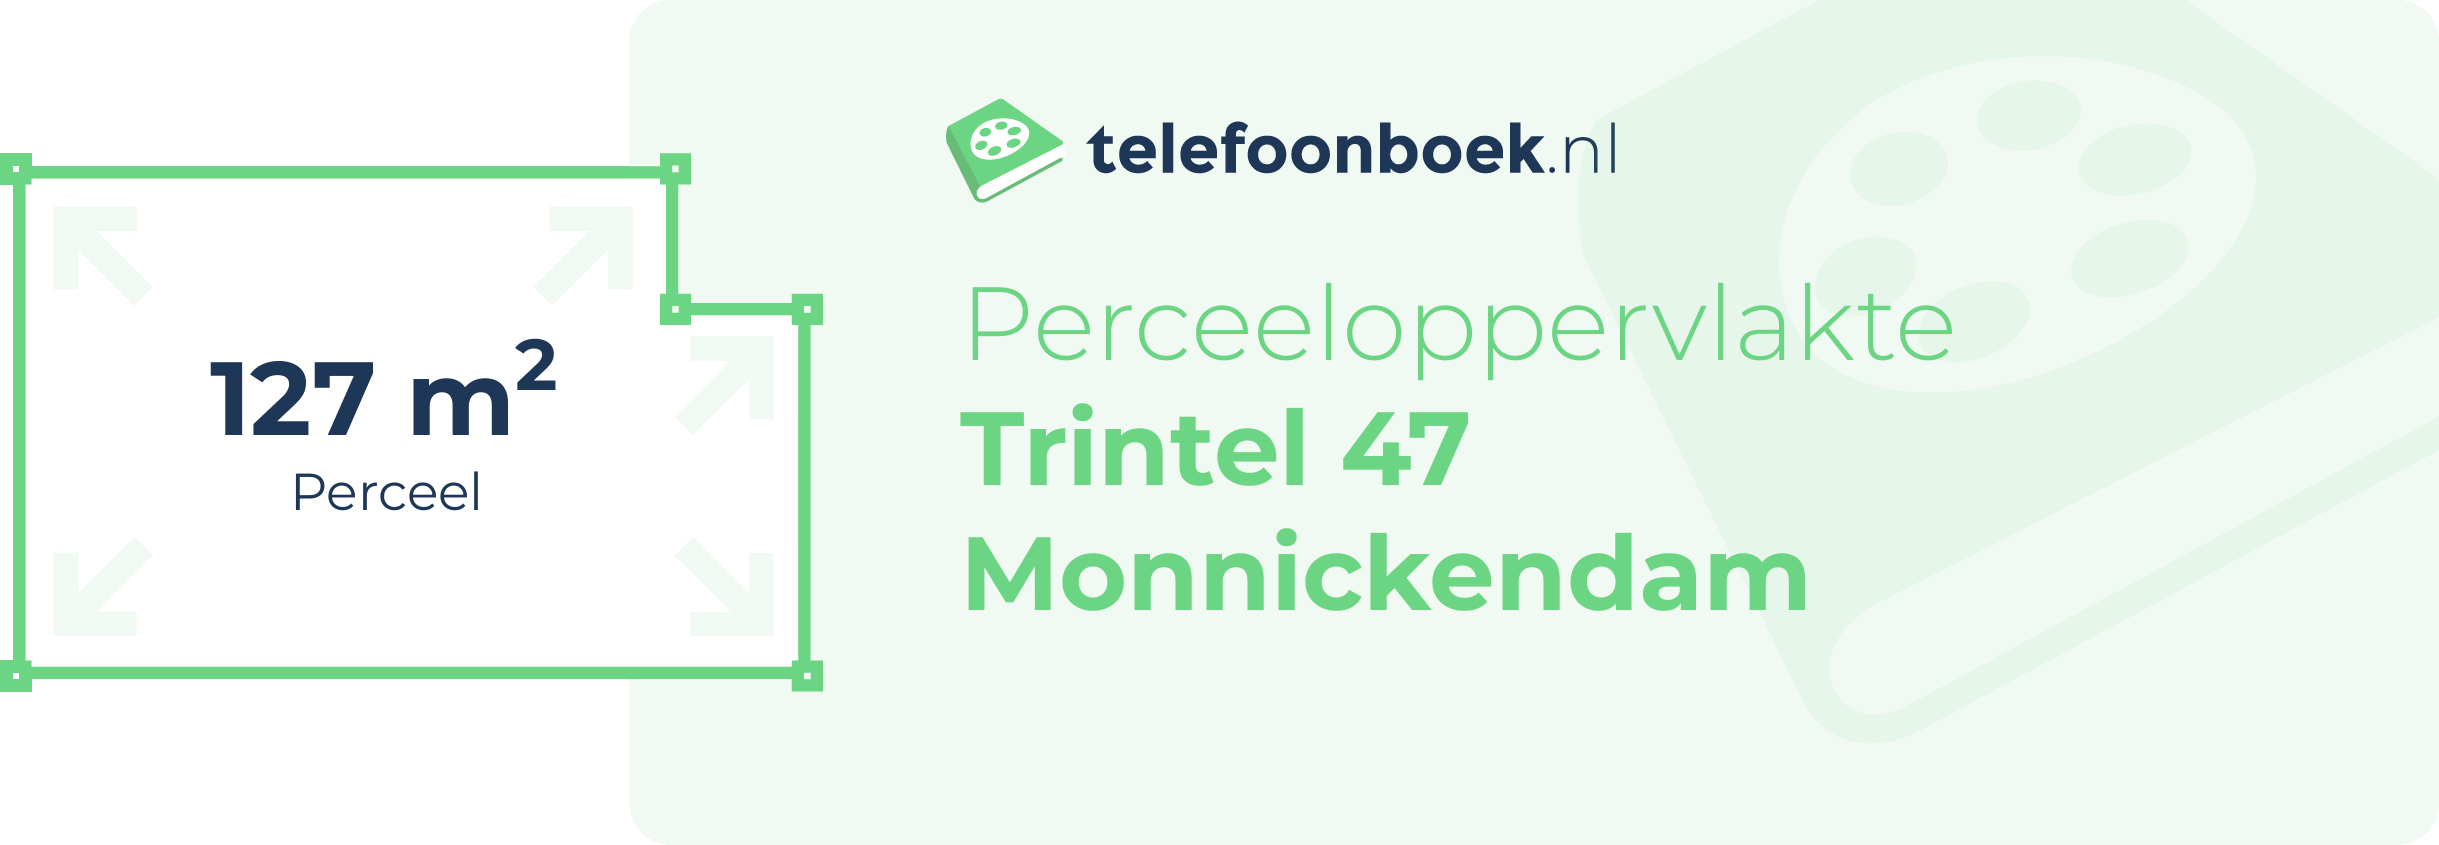 Perceeloppervlakte Trintel 47 Monnickendam